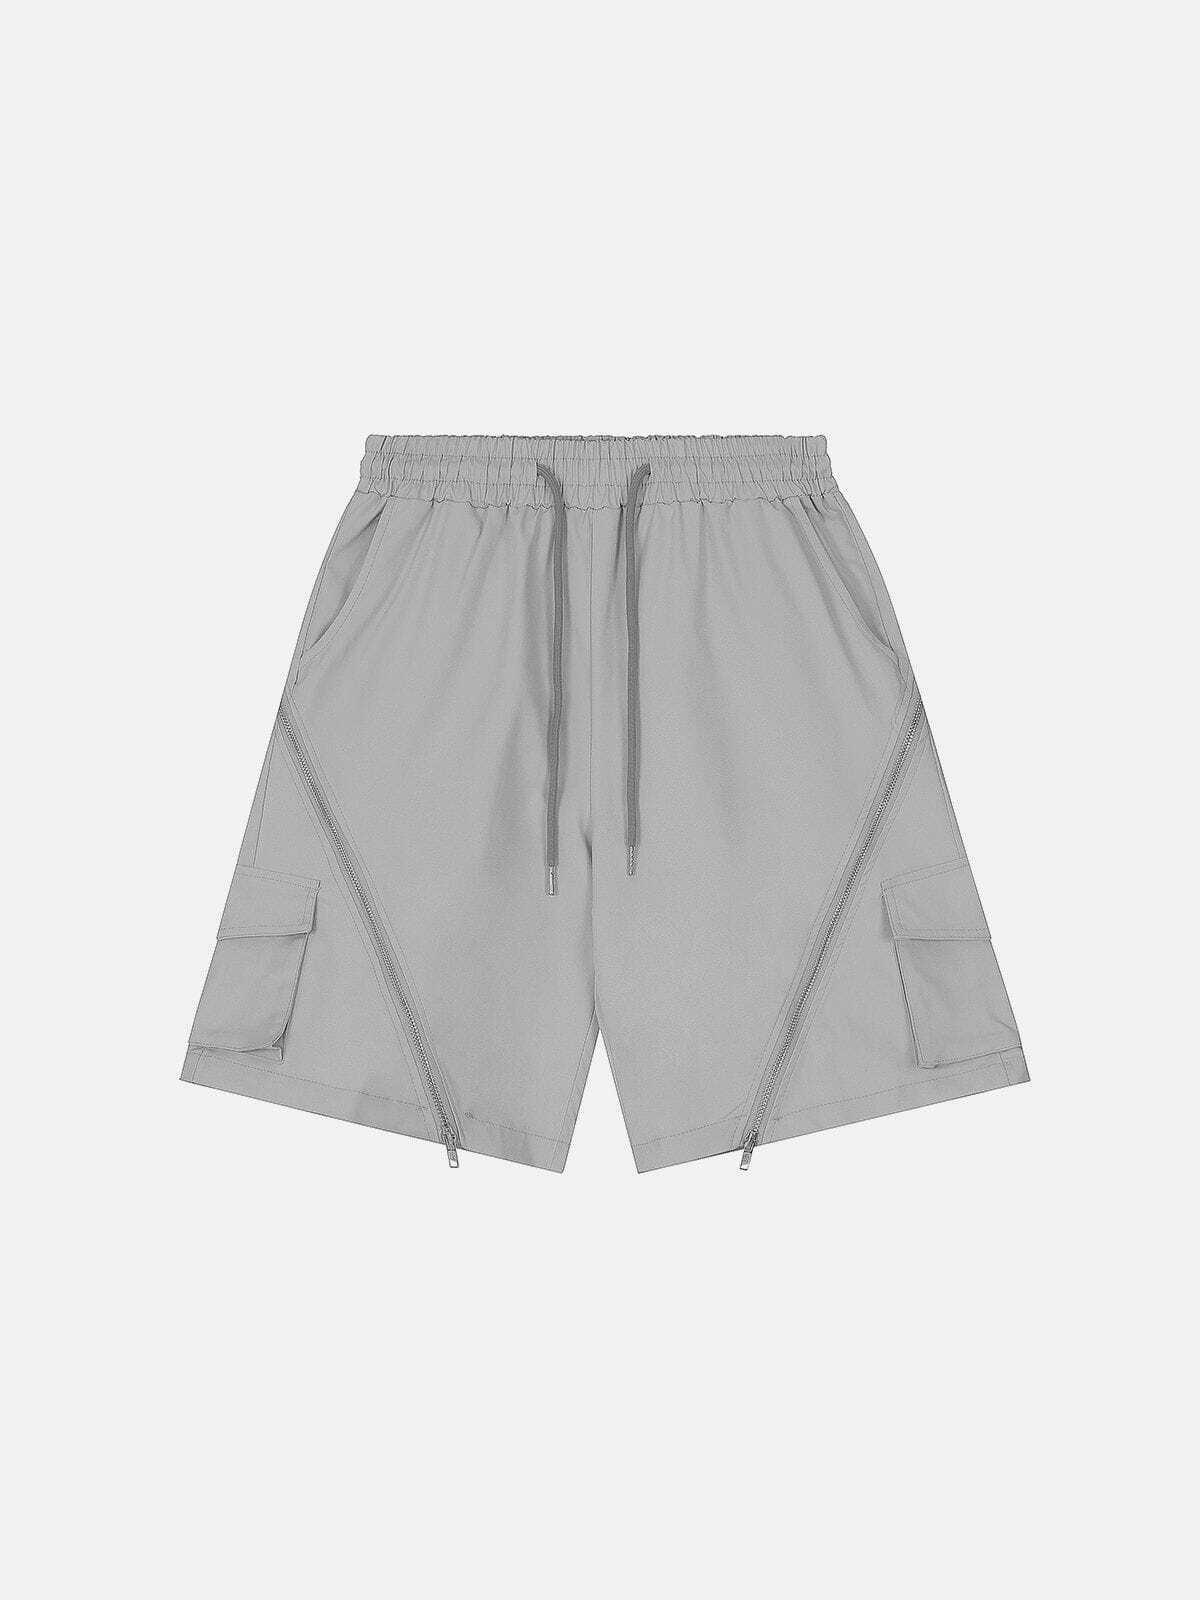 edgy irregular zip shorts   youthful urban streetwear 2819